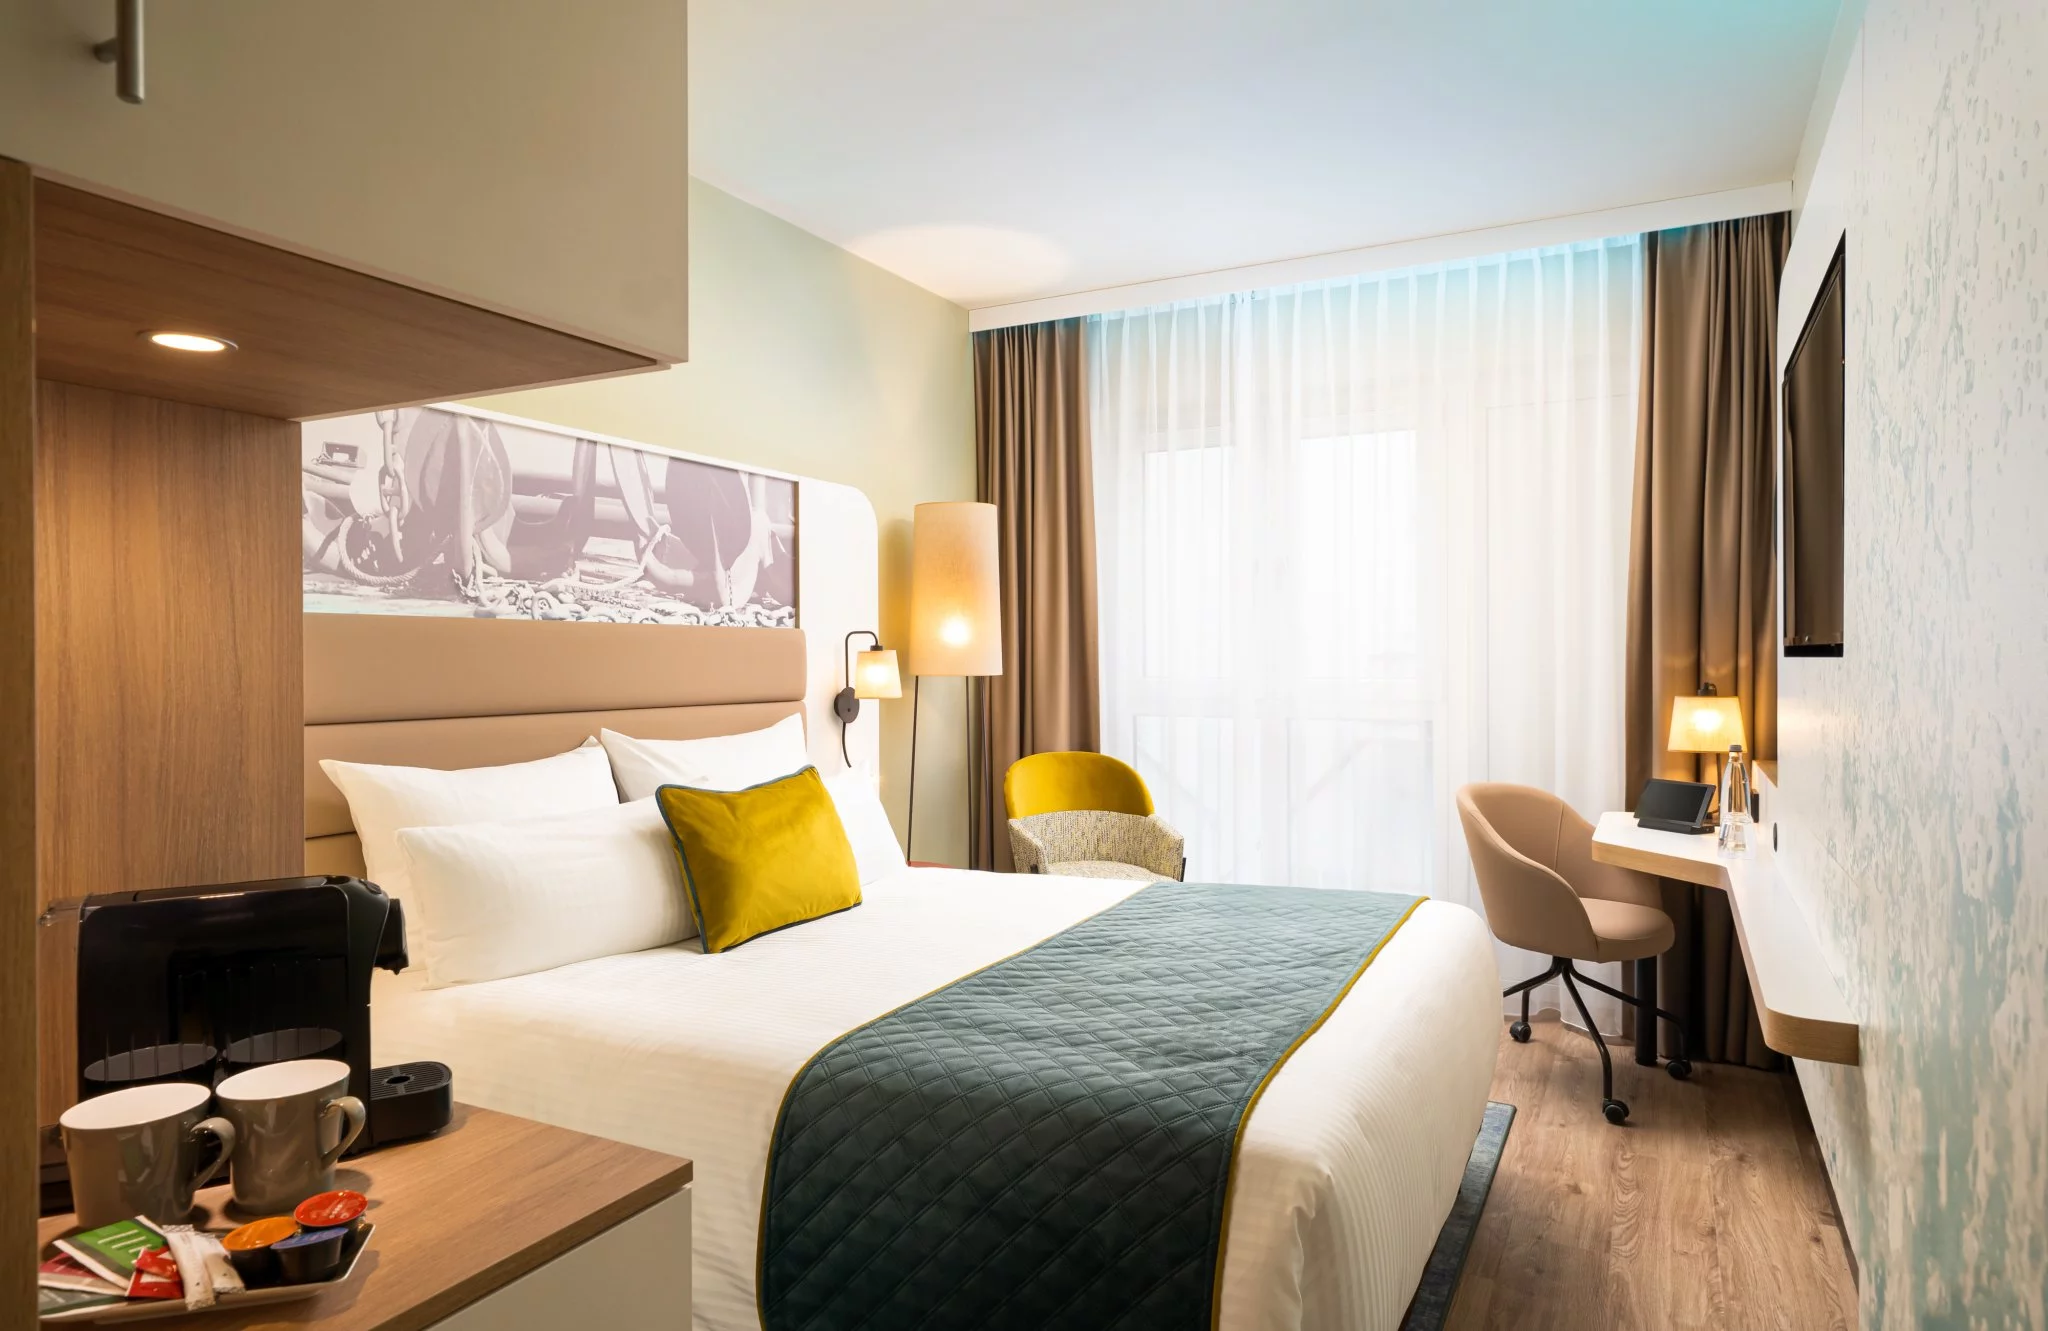 Leonardo Hotel Hamburg Altona - Comfort Double Room